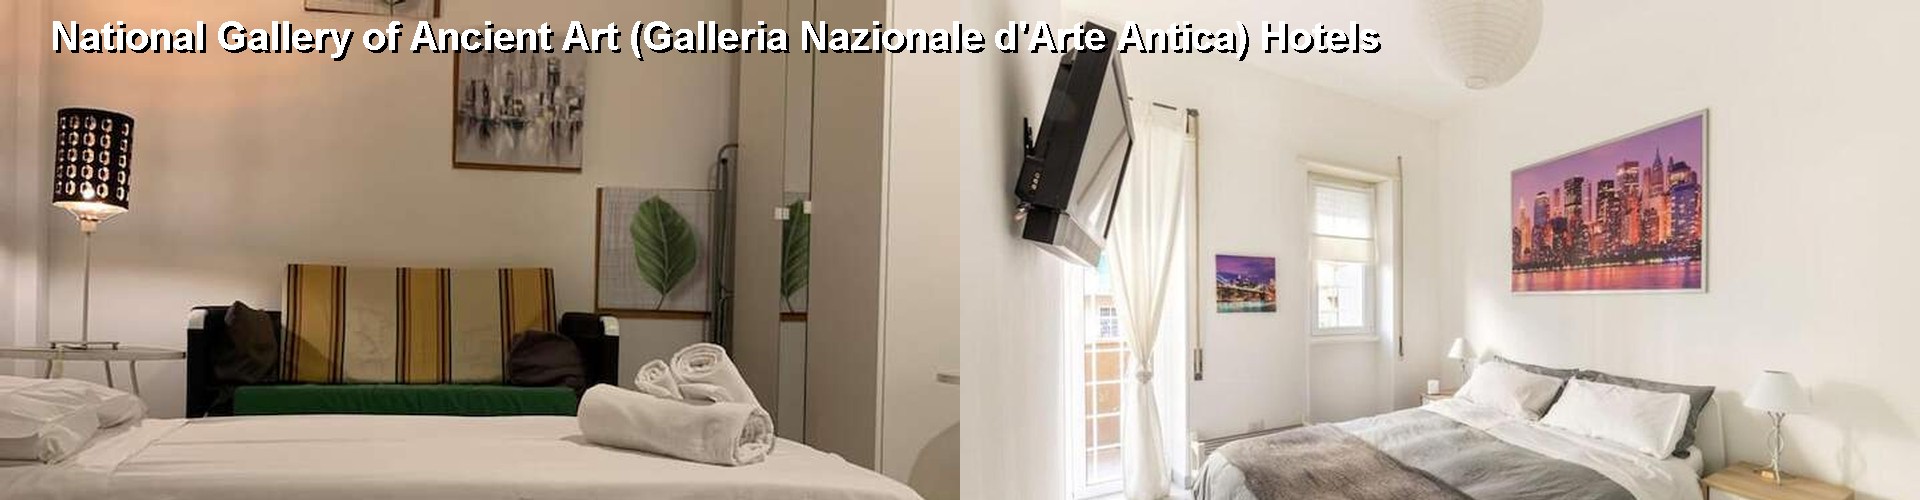 5 Best Hotels near National Gallery of Ancient Art (Galleria Nazionale d'Arte Antica)